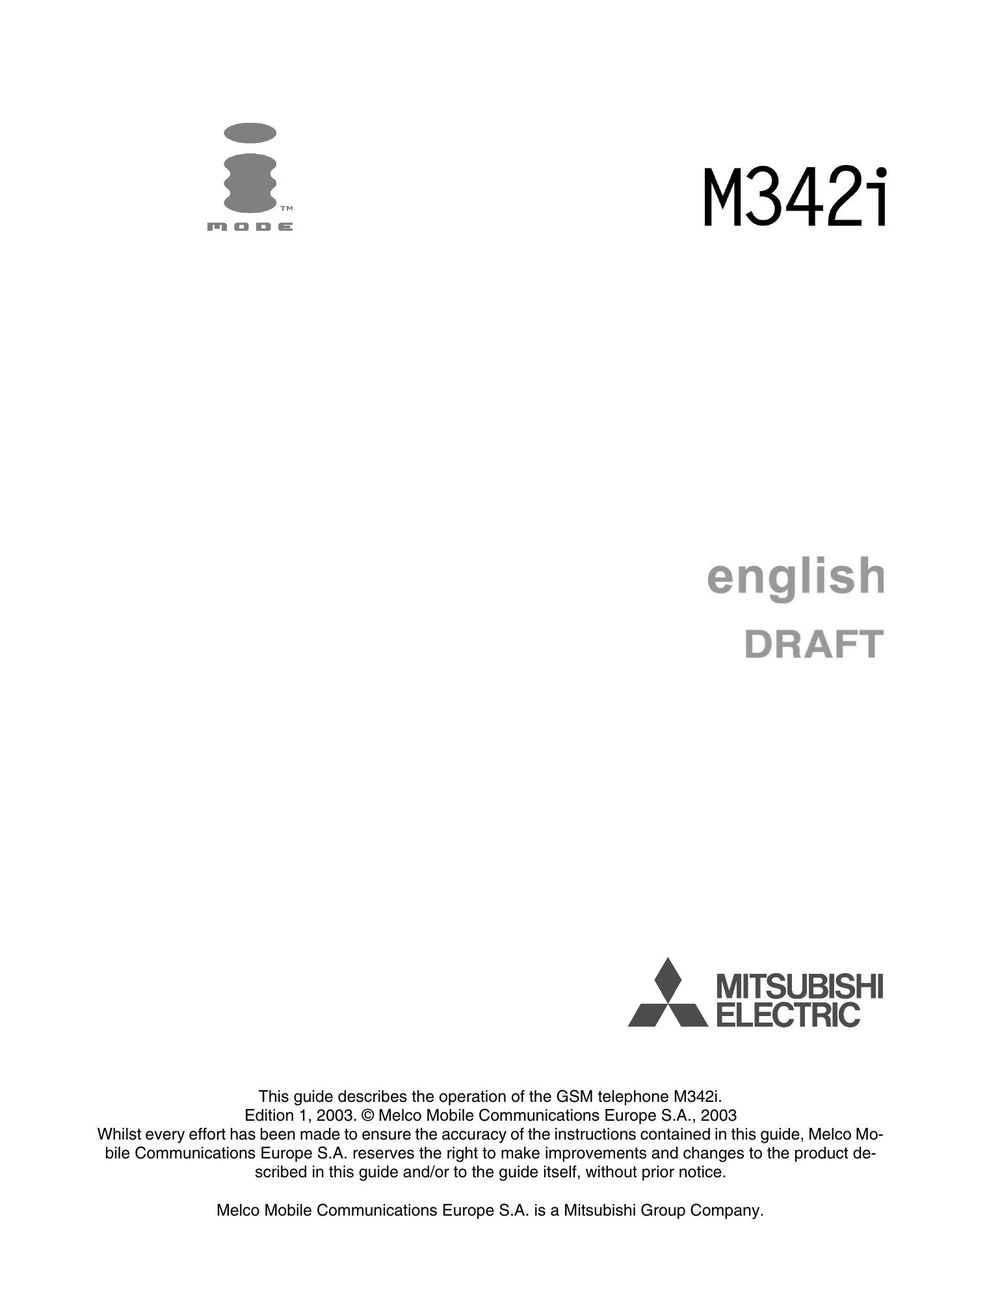 Mitsubishi Electronics M342i Cell Phone User Manual